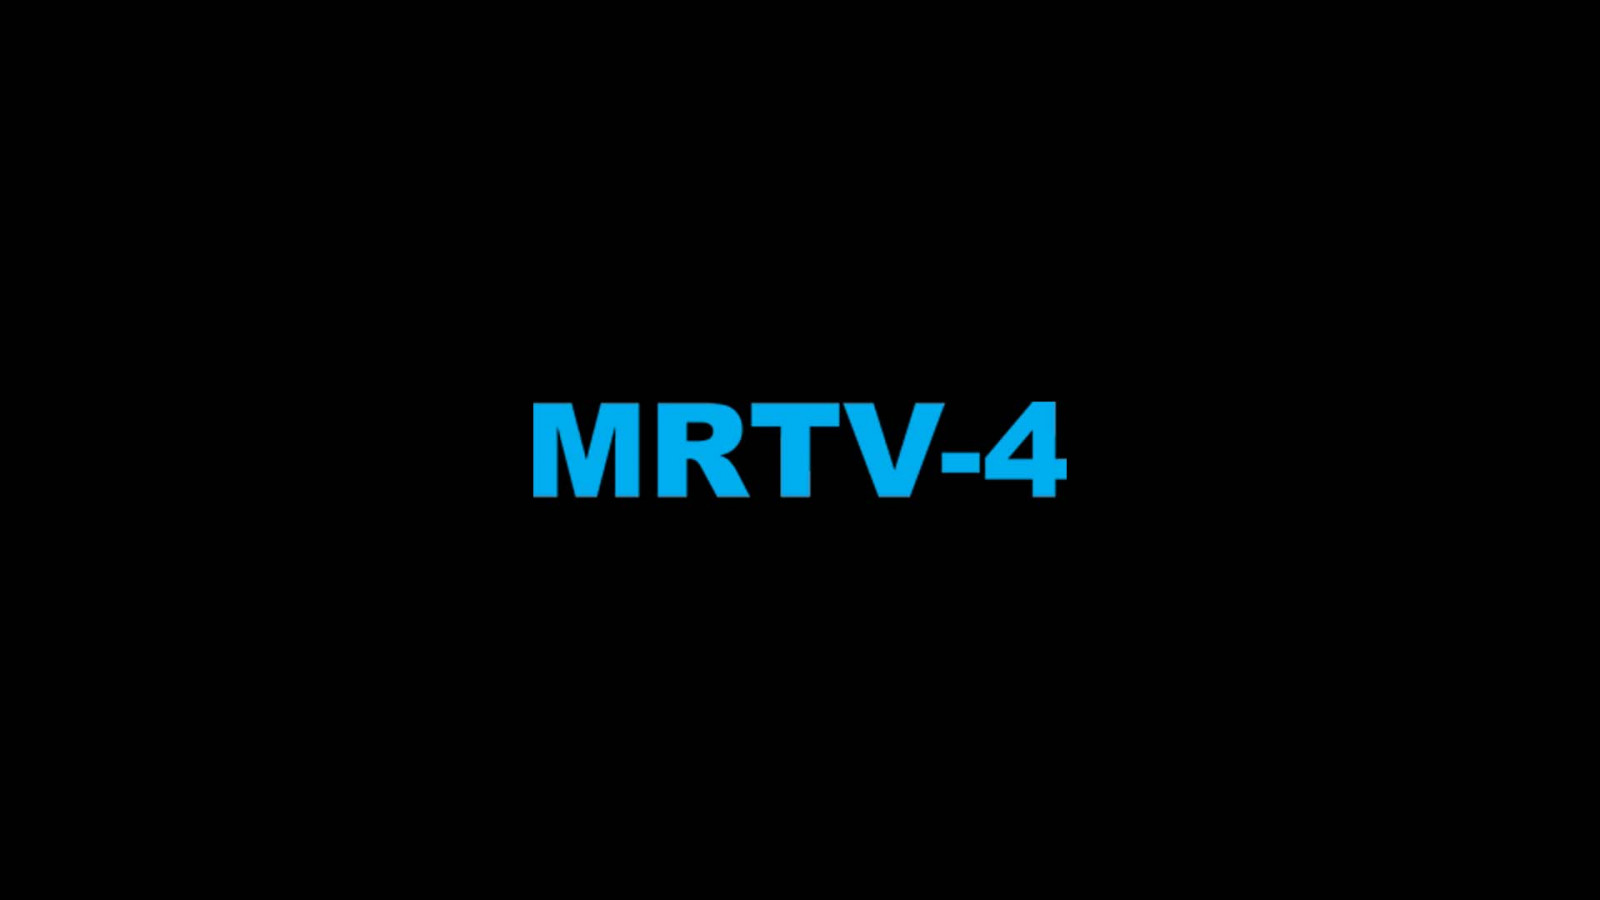 Myanmar Mrtv 4 Live Stream